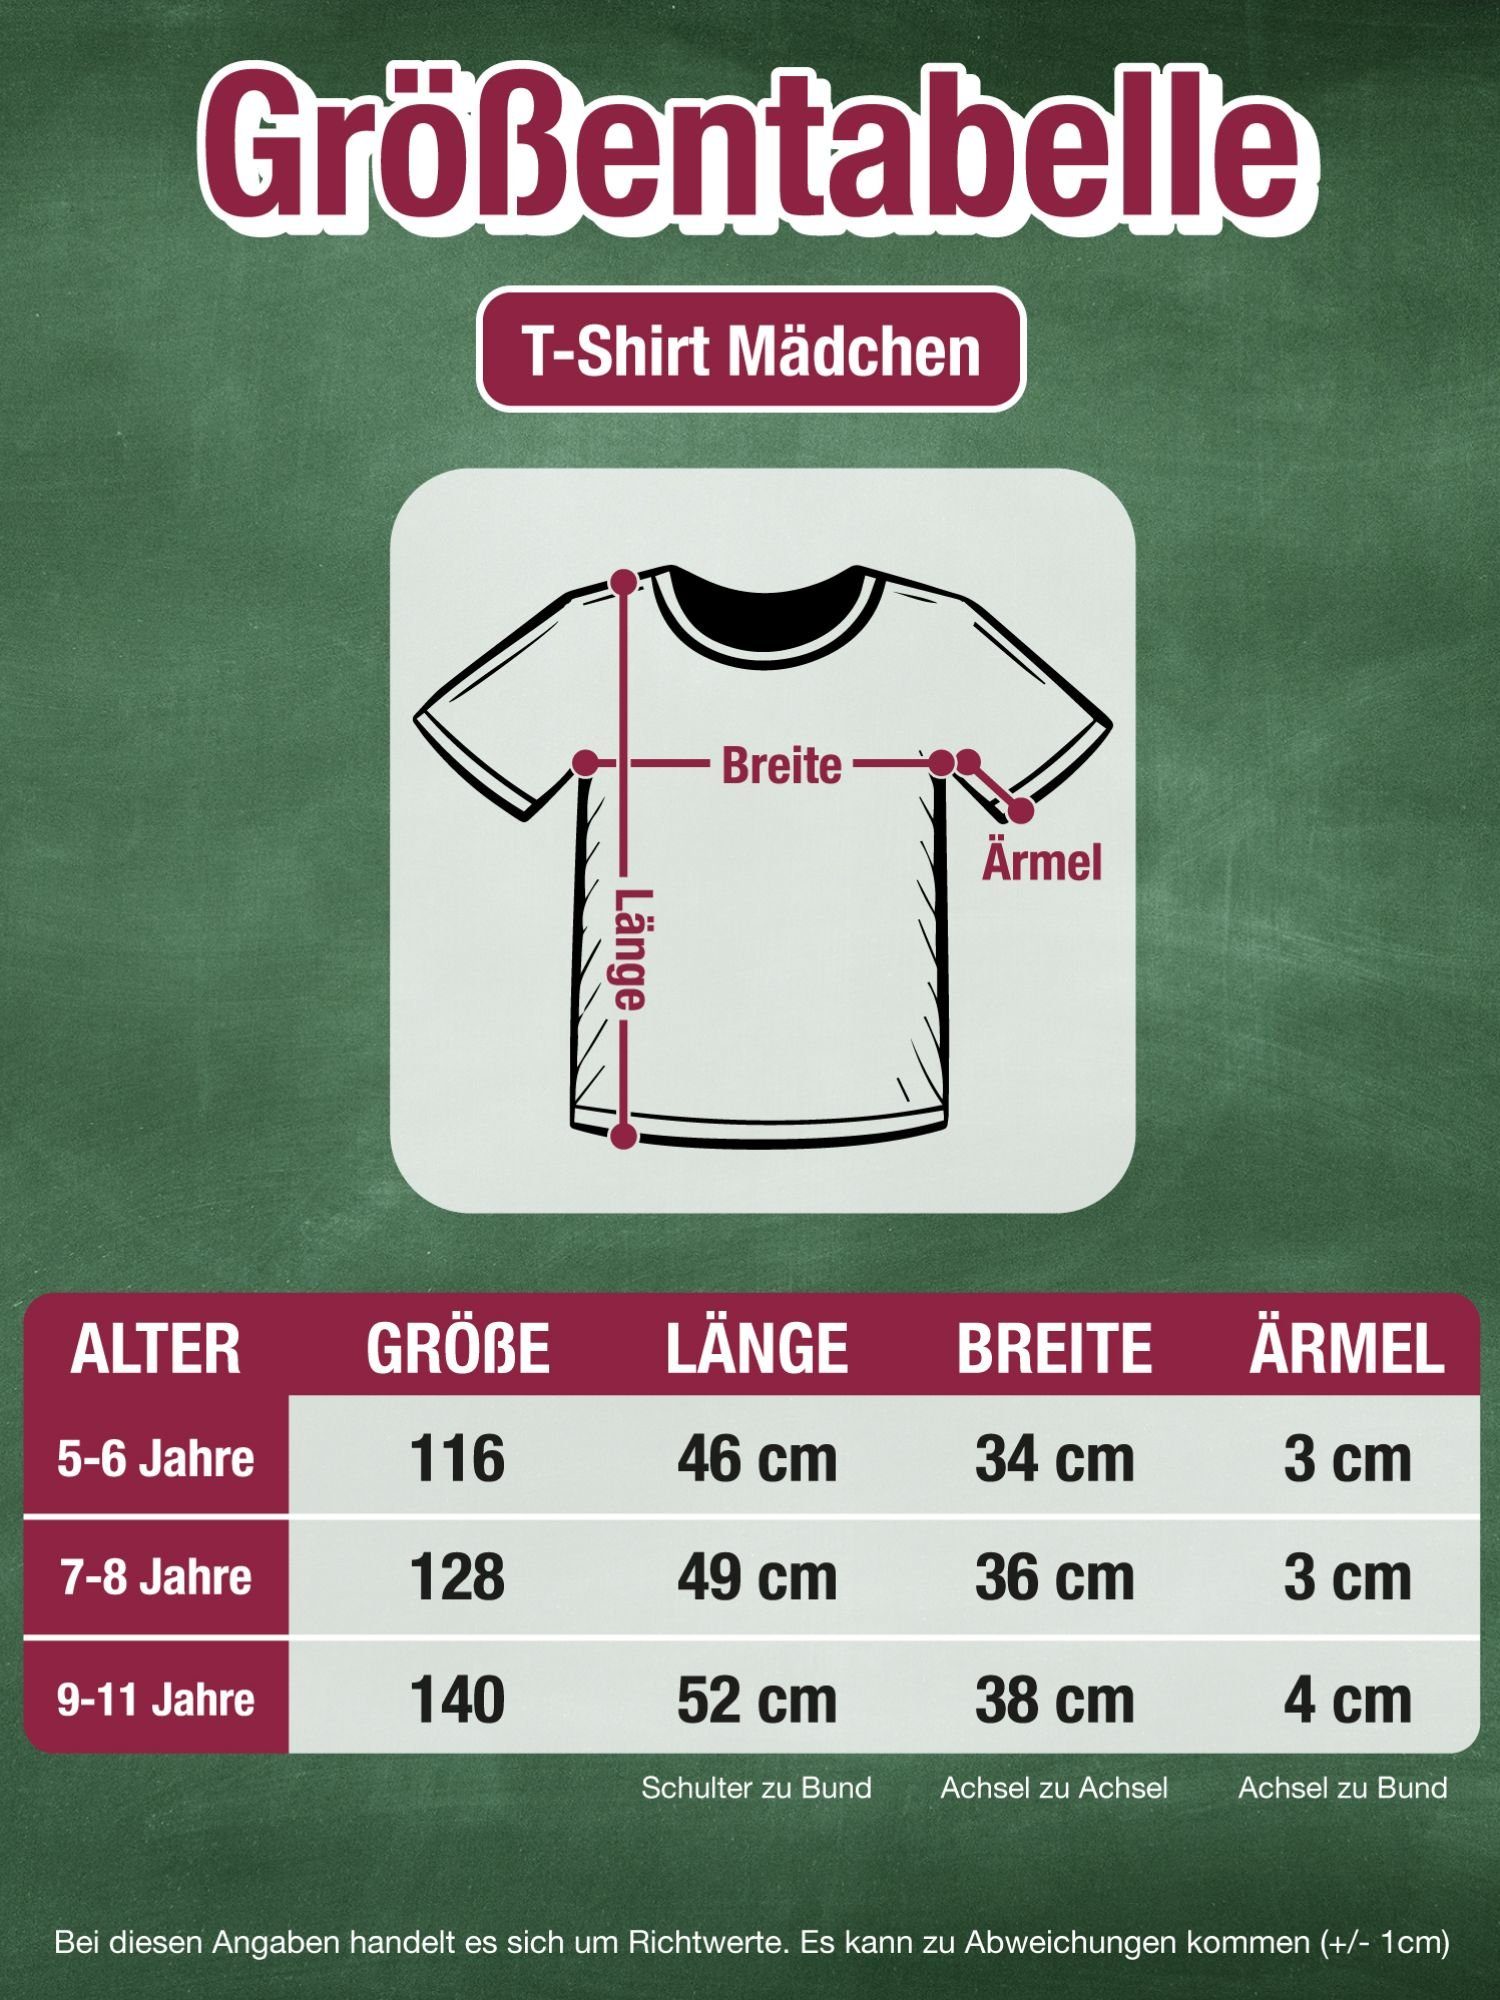 Kindergarten Fuchsia T-Shirt Bye, Mädchen Einschulung Bye Shirtracer 1